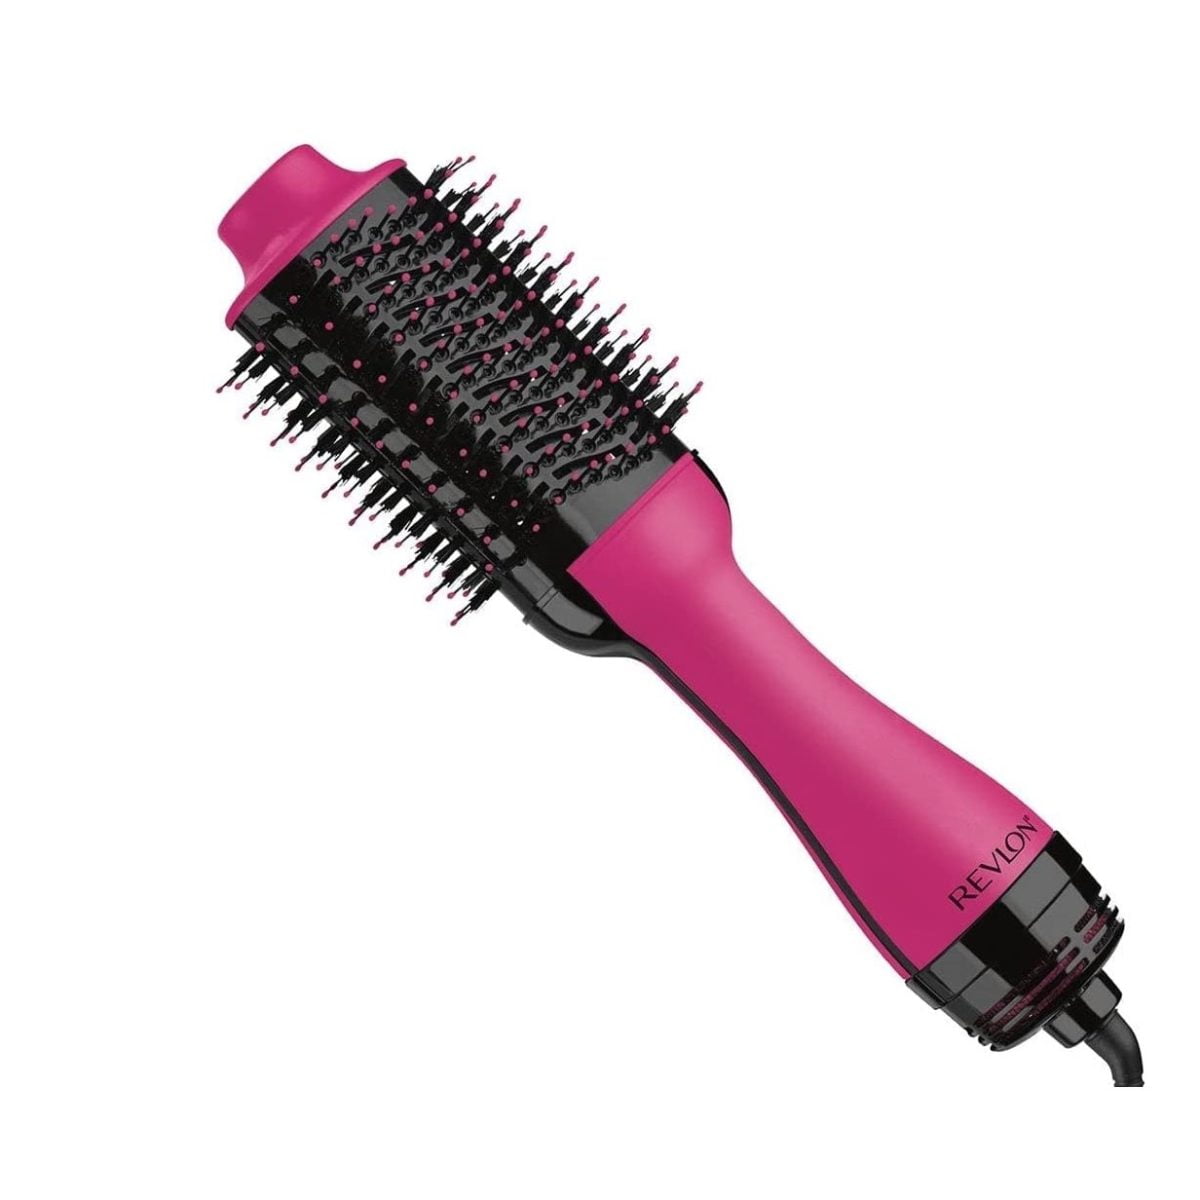 Revlon One-Step Hair Dryer And Volumiser - New Pink Edition